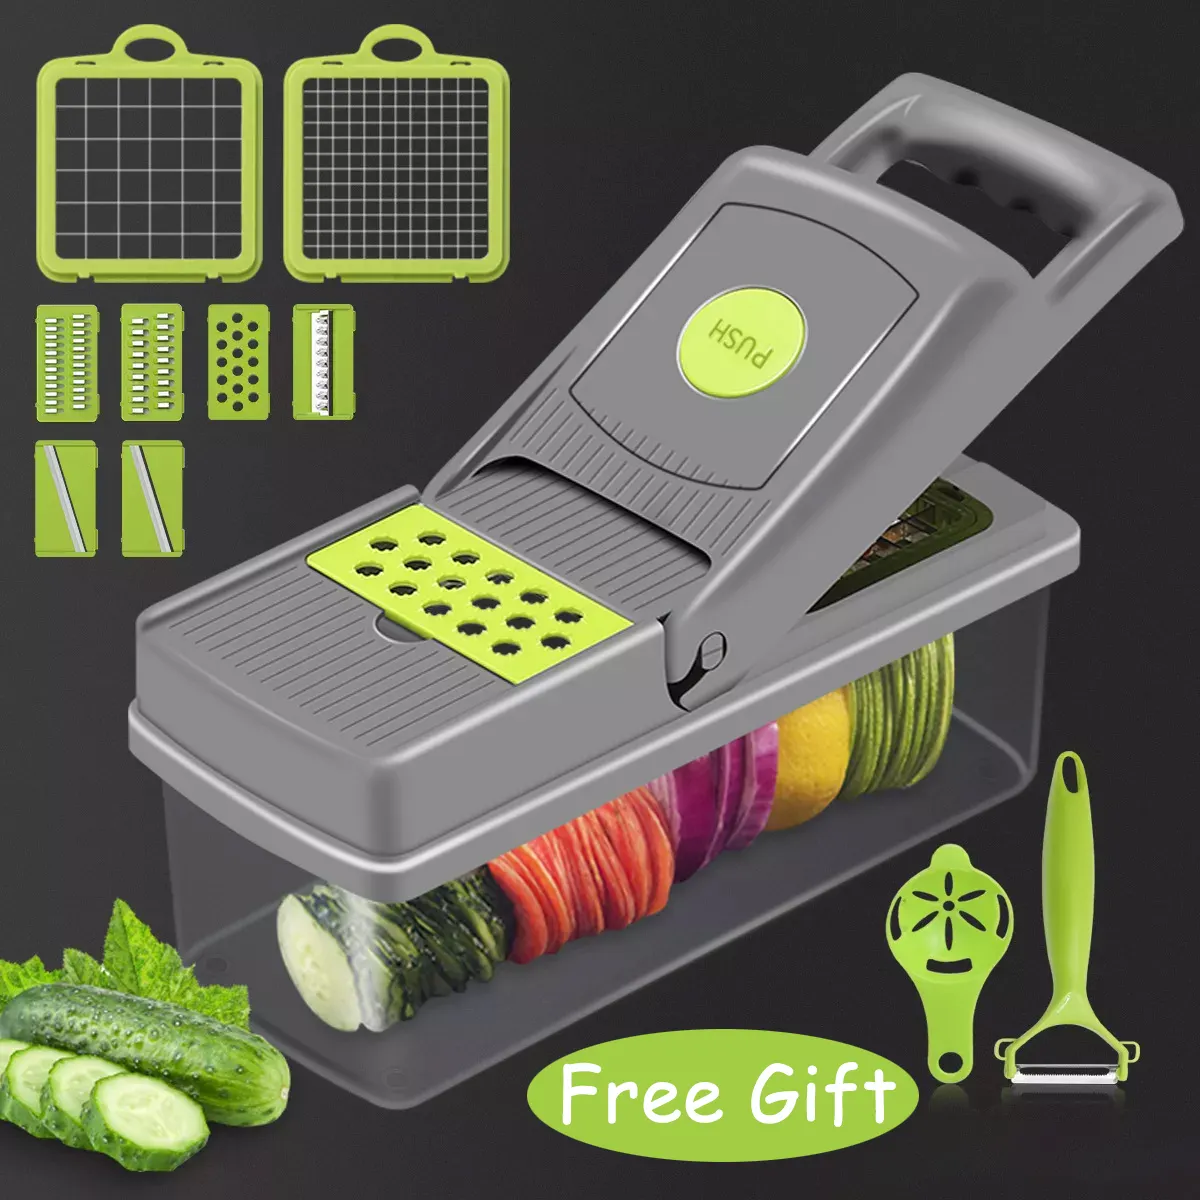 GC Multi-function fruit & vegetable tools kitchen vegetable cutter chopper slicer potato grater salad vegetable cutter